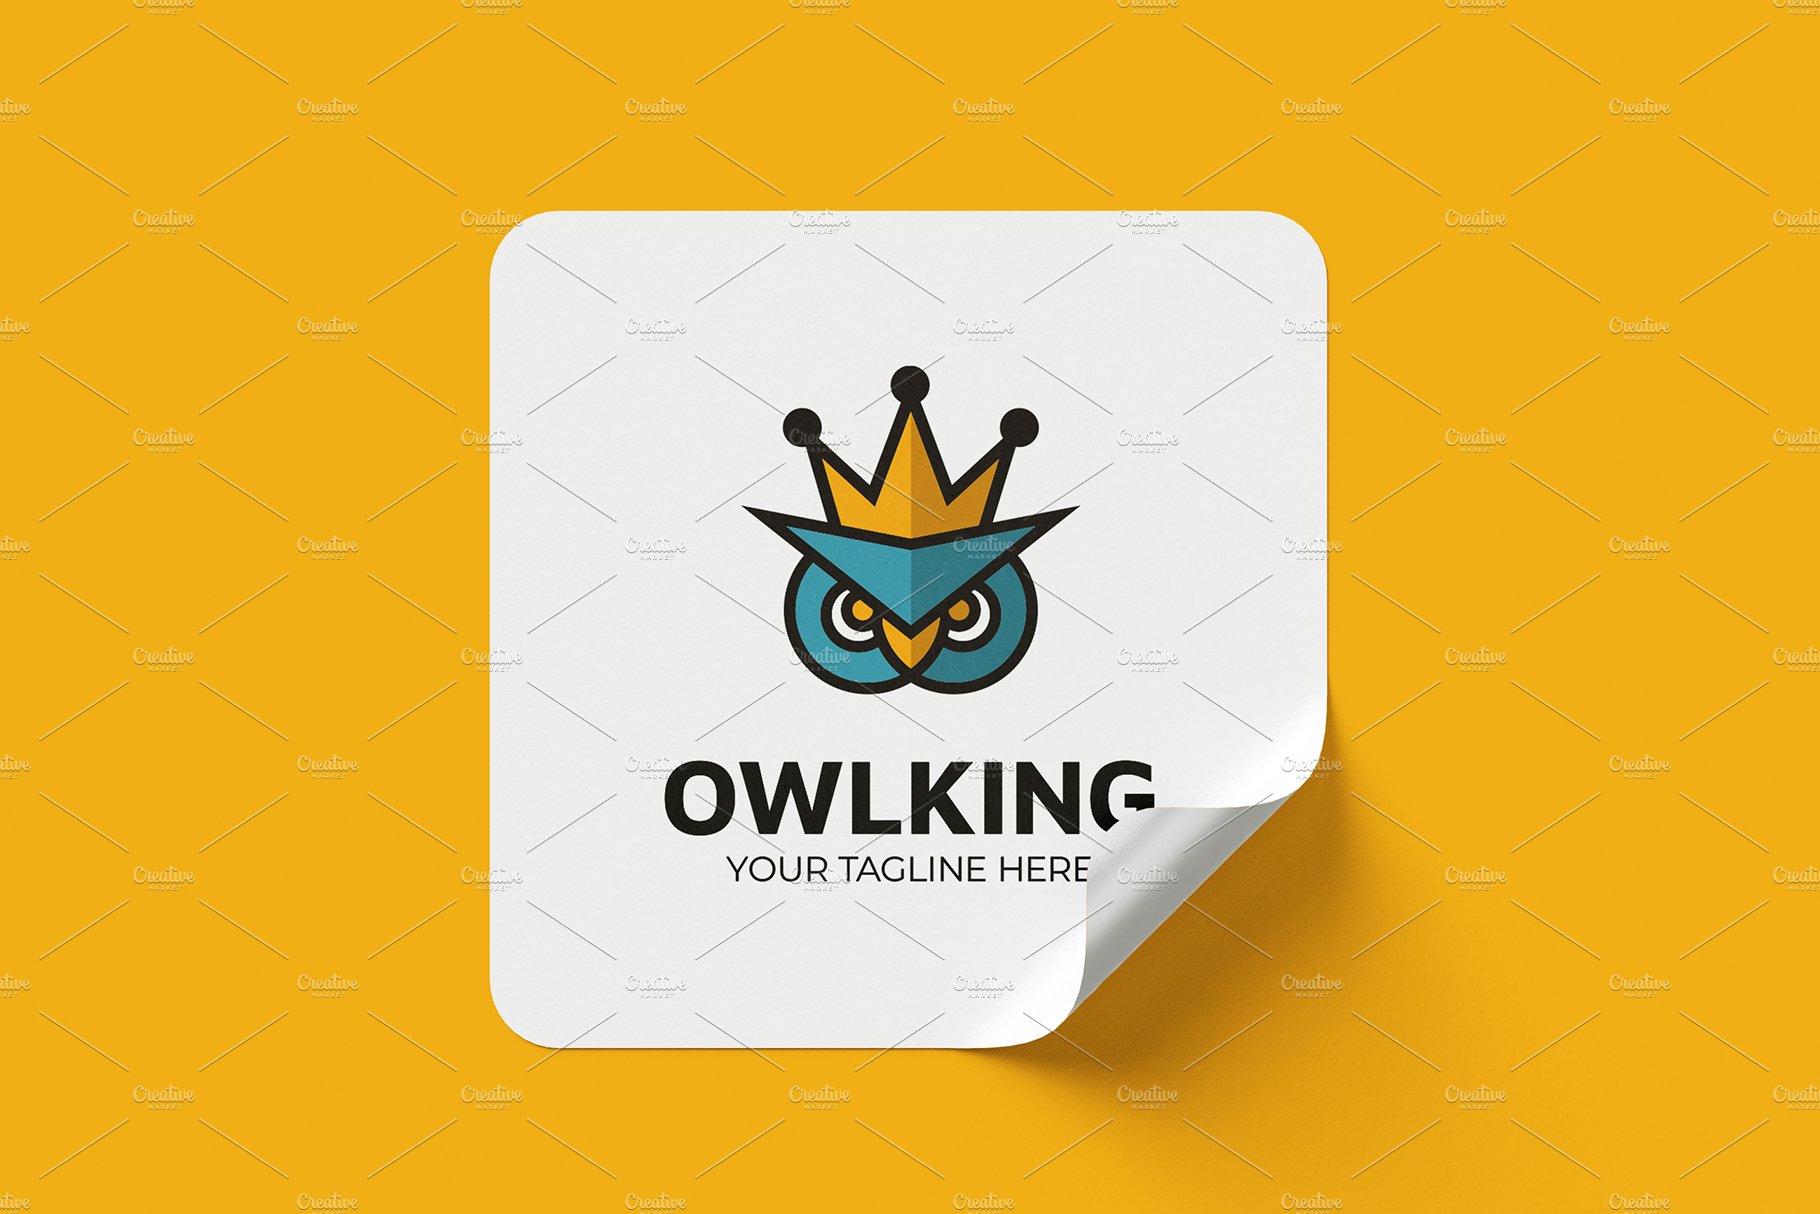 Owl King Logo preview image.